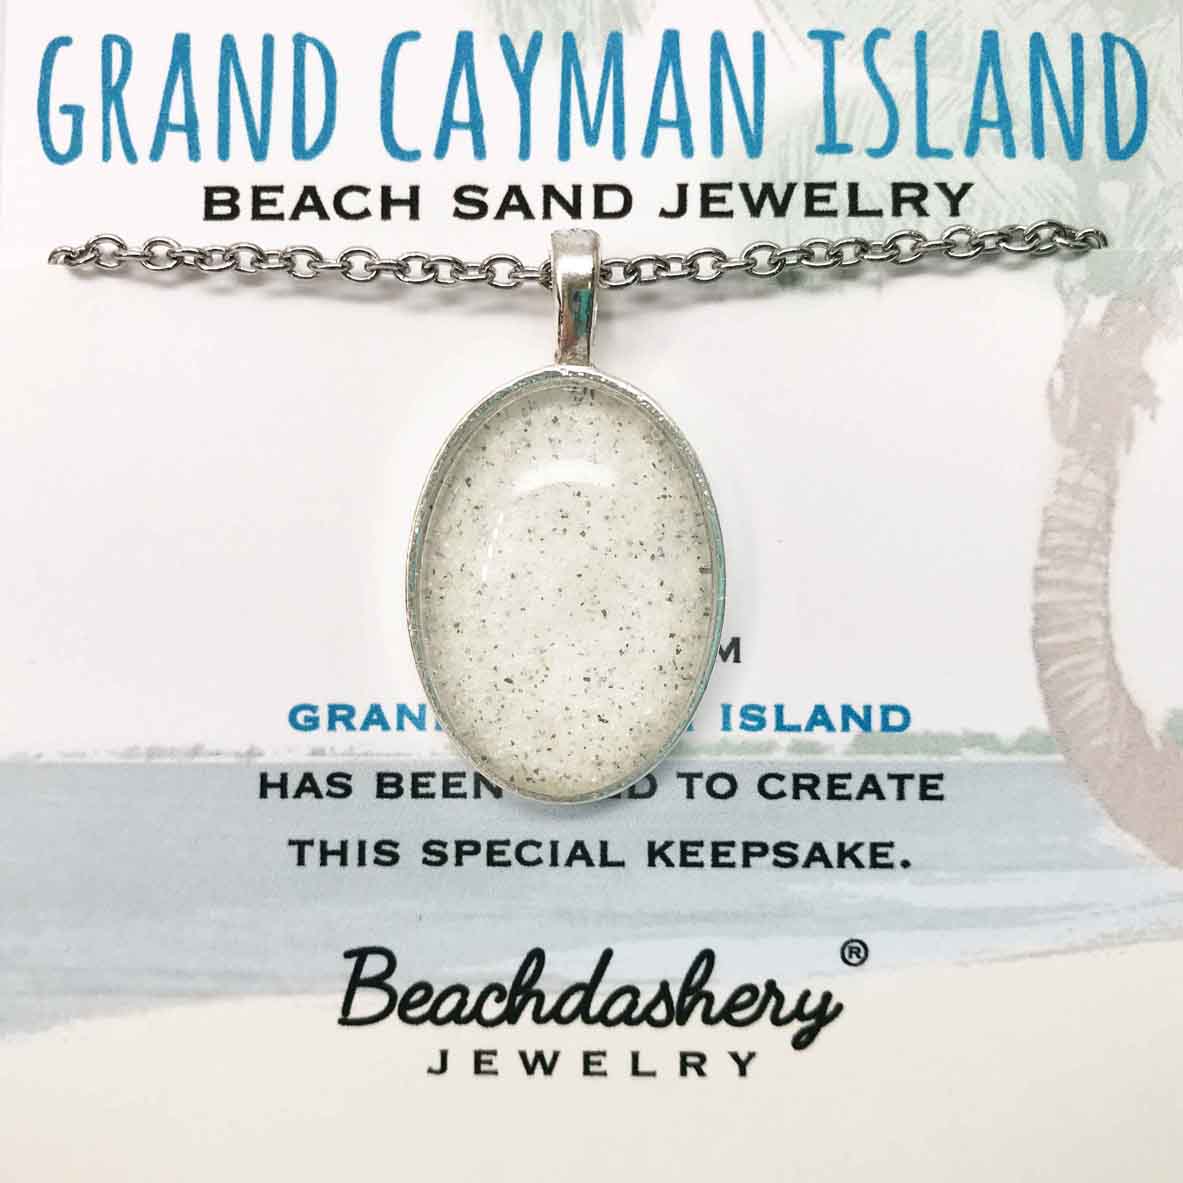 Grand Cayman Islands Beach Sand Jewelry Beachdashery® Jewelry